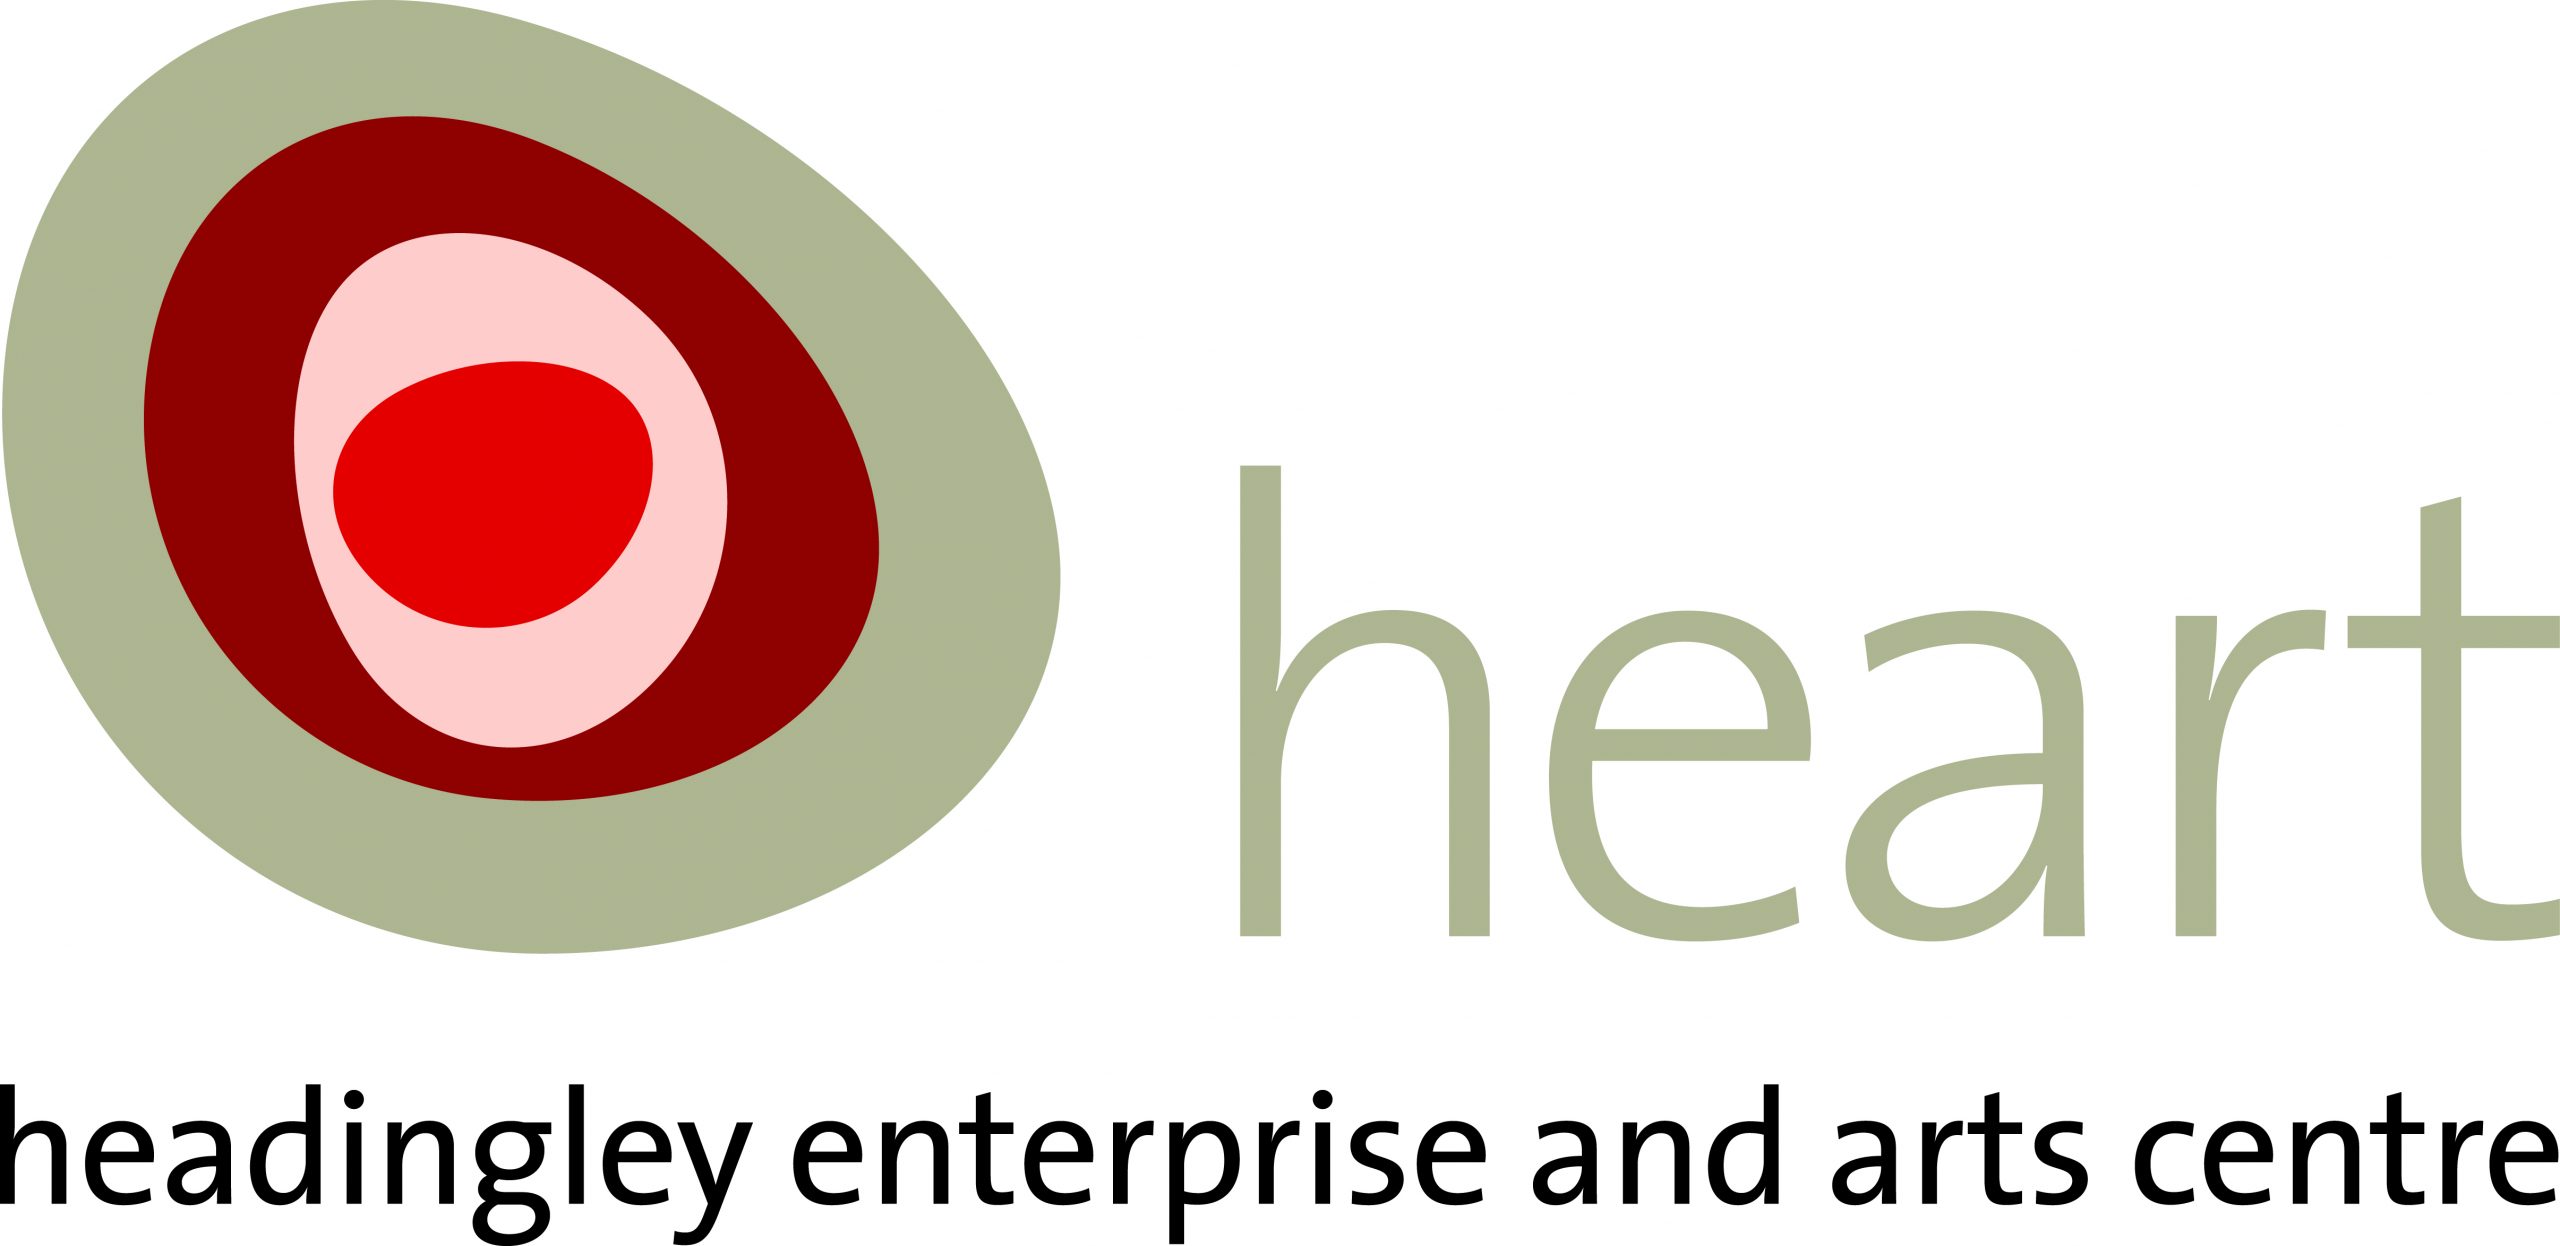 heart   headingley enterprise and arts centre 